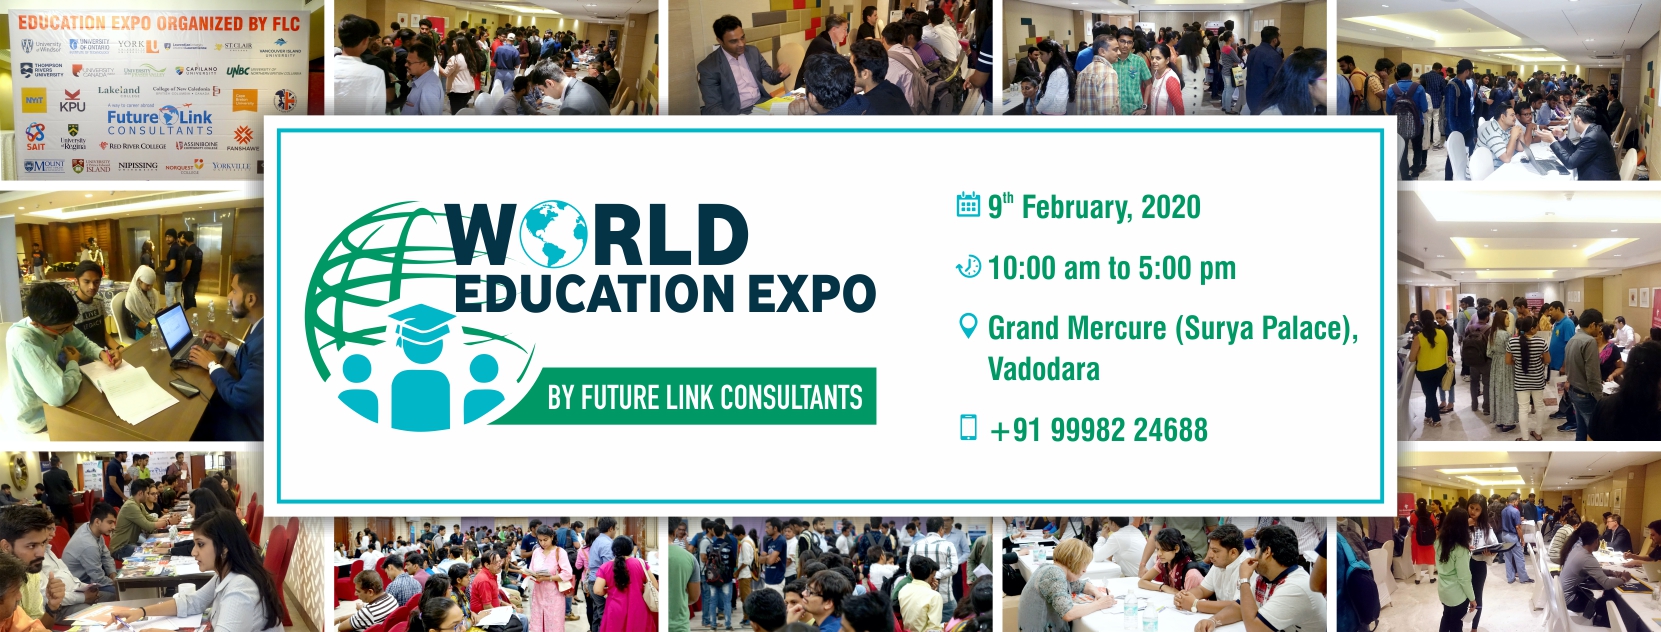 World Education Expo, Vadodara, Gujarat, India